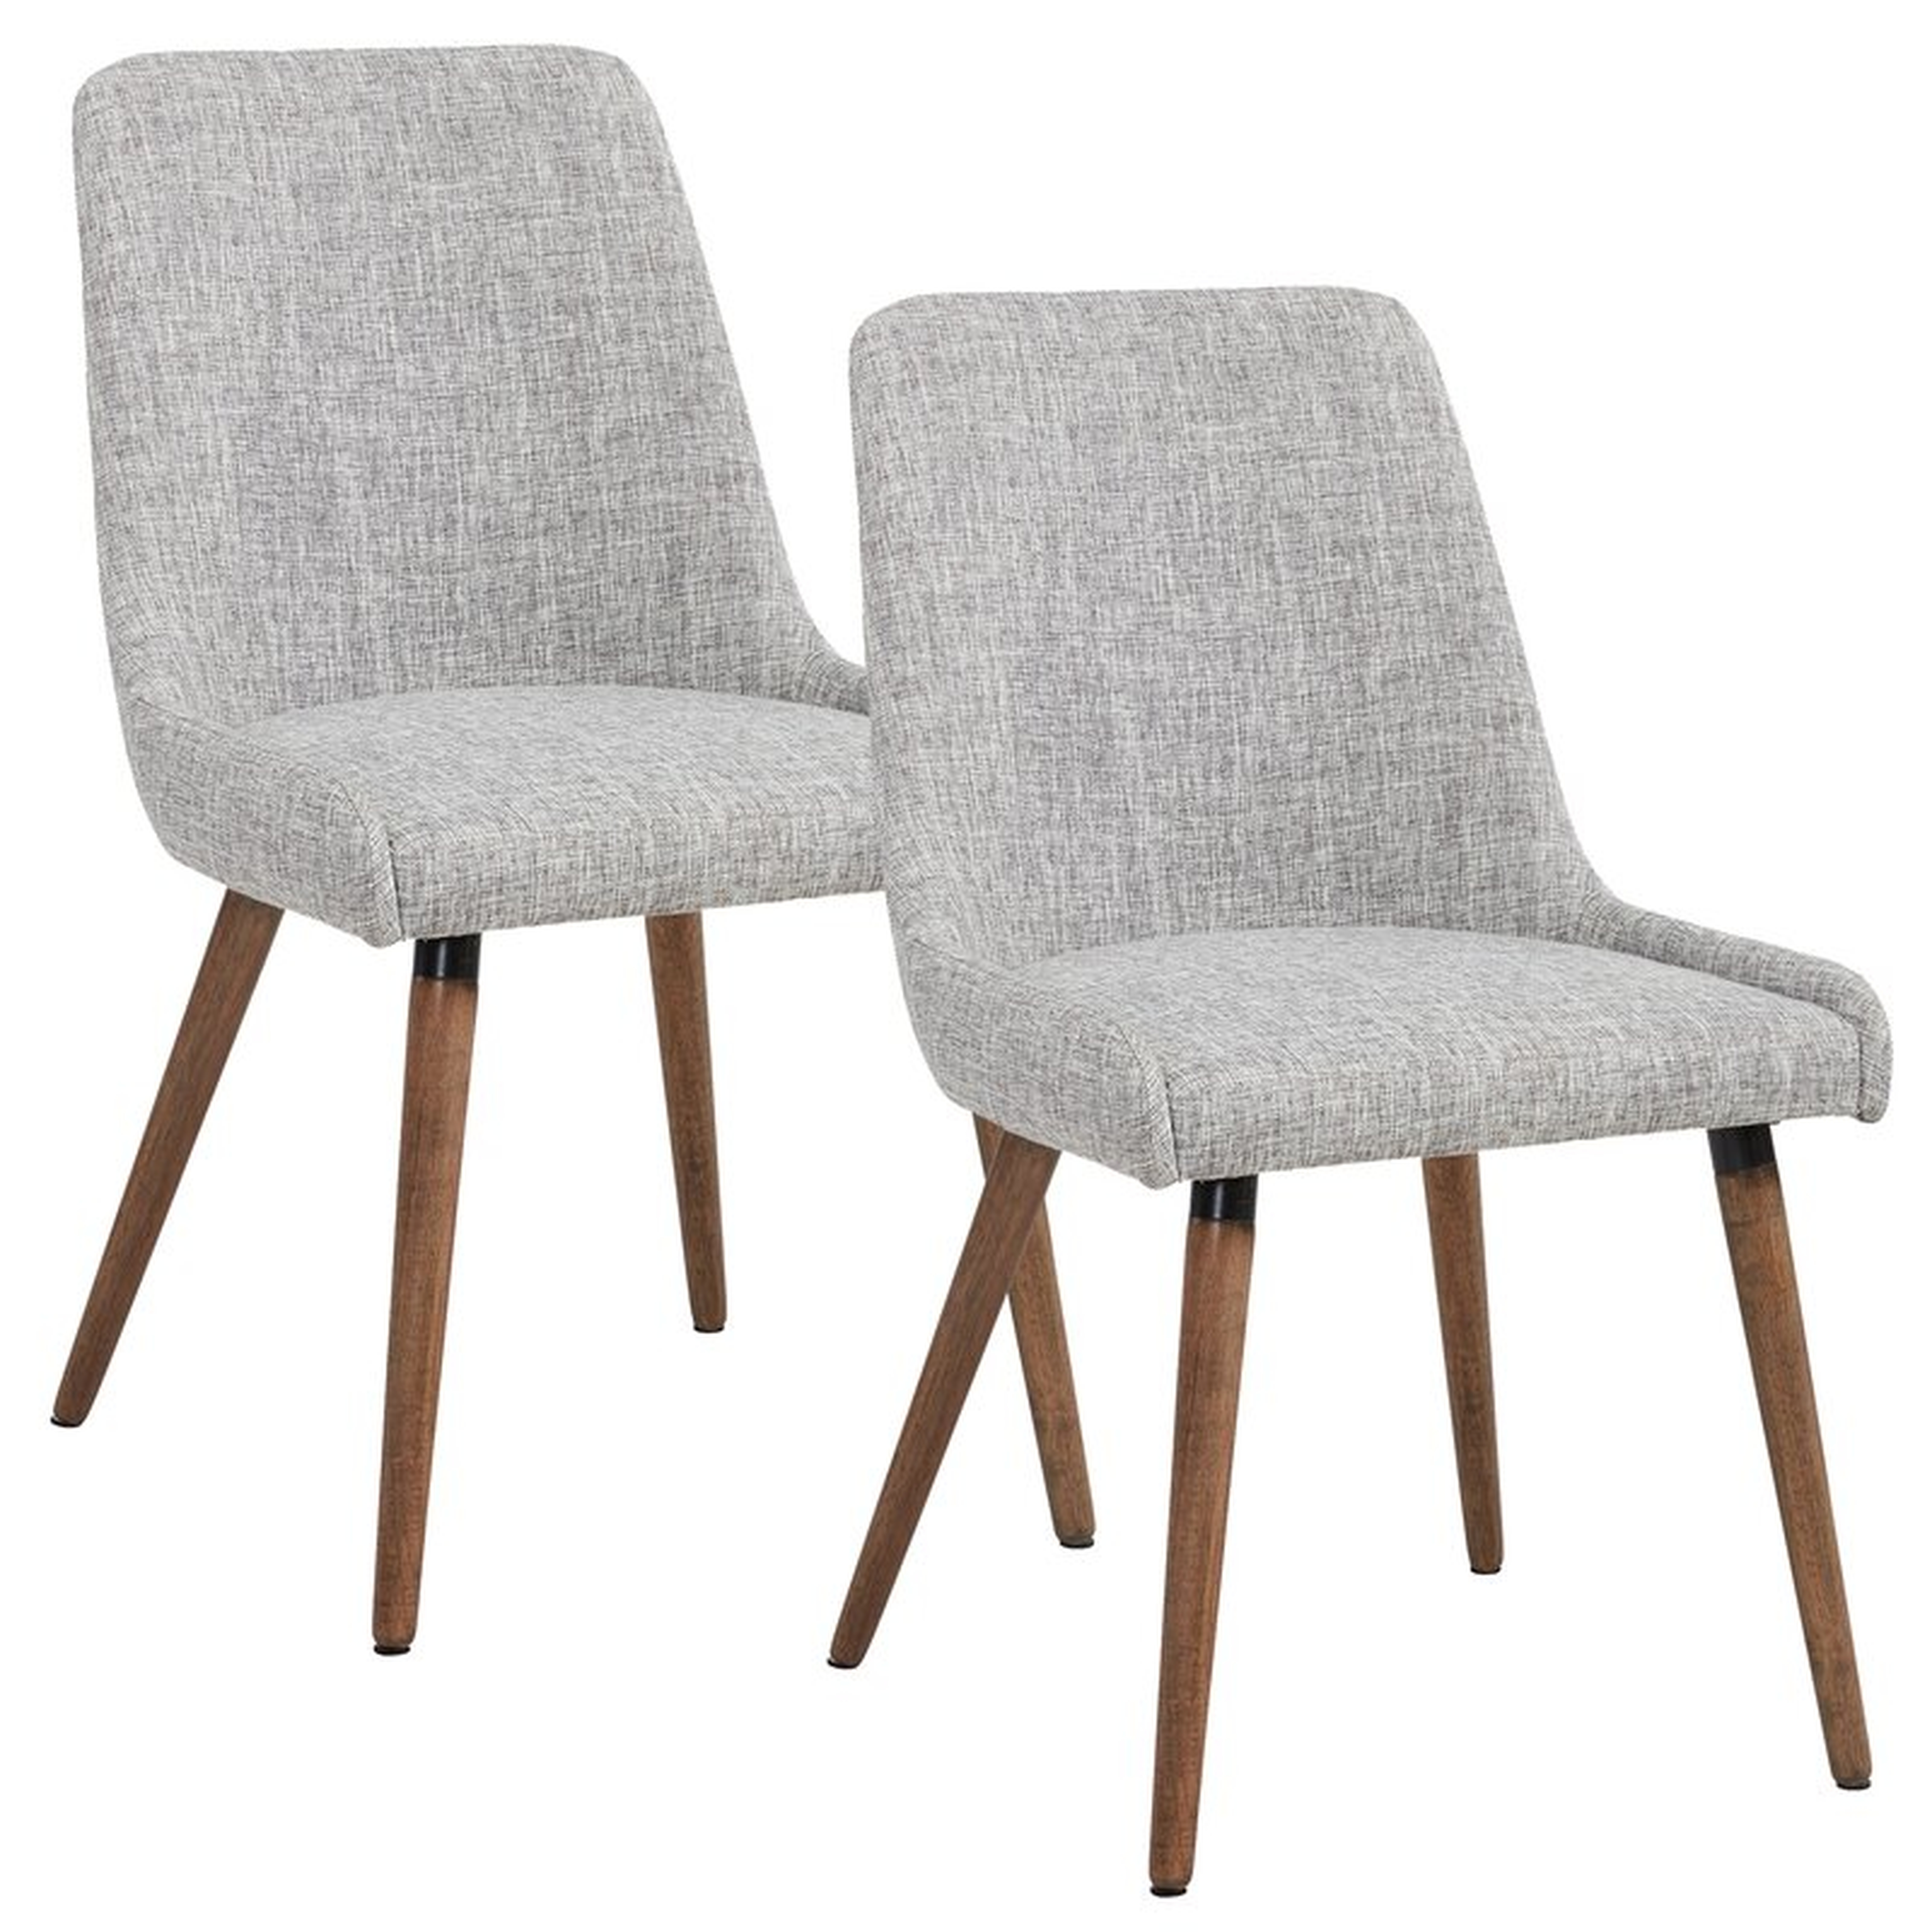 Webber Upholstered Dining Chair - Set of 2 - Wayfair